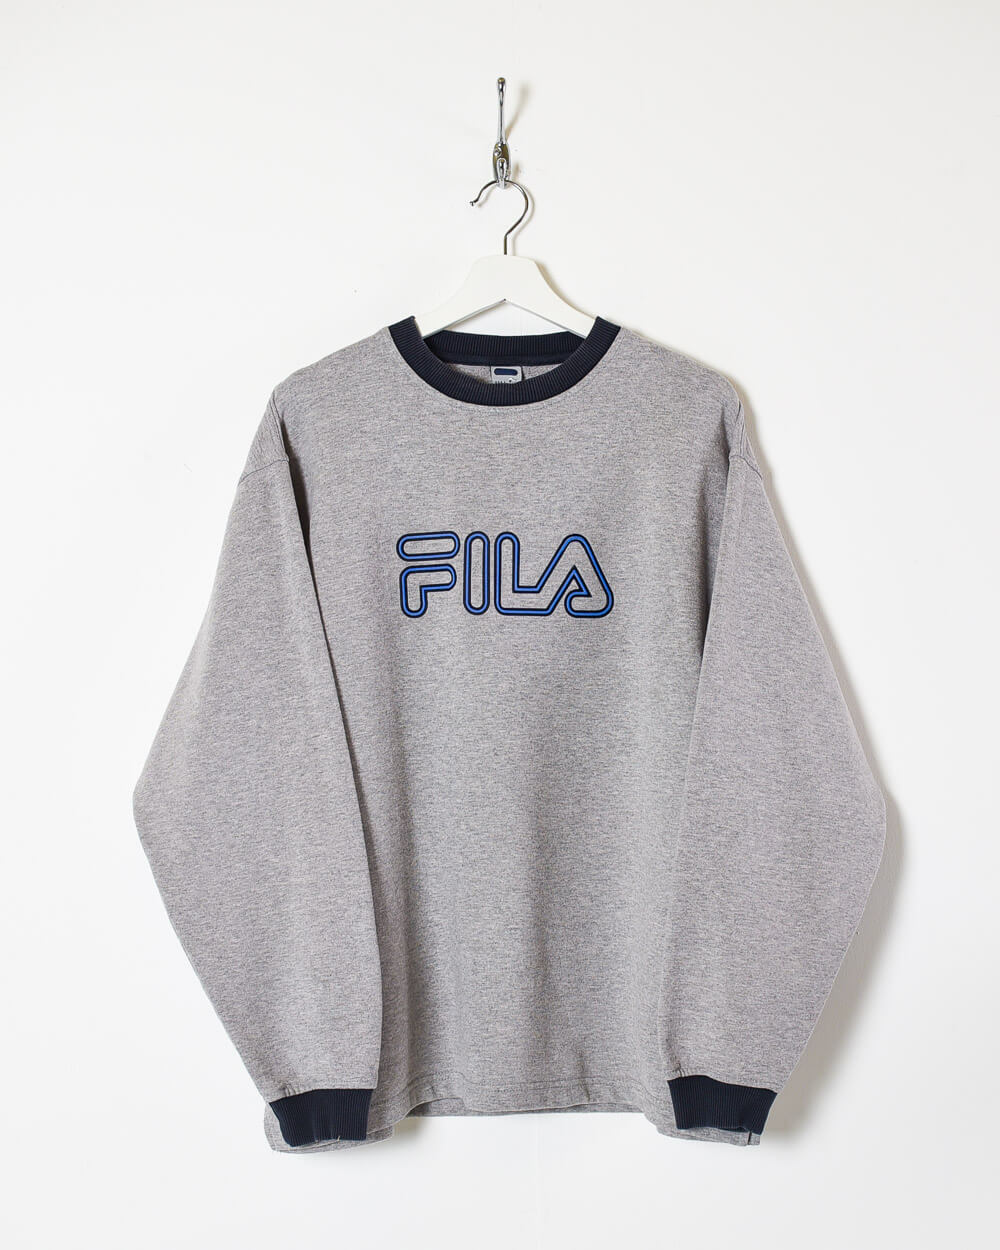 Stone Fila Sweatshirt - Large